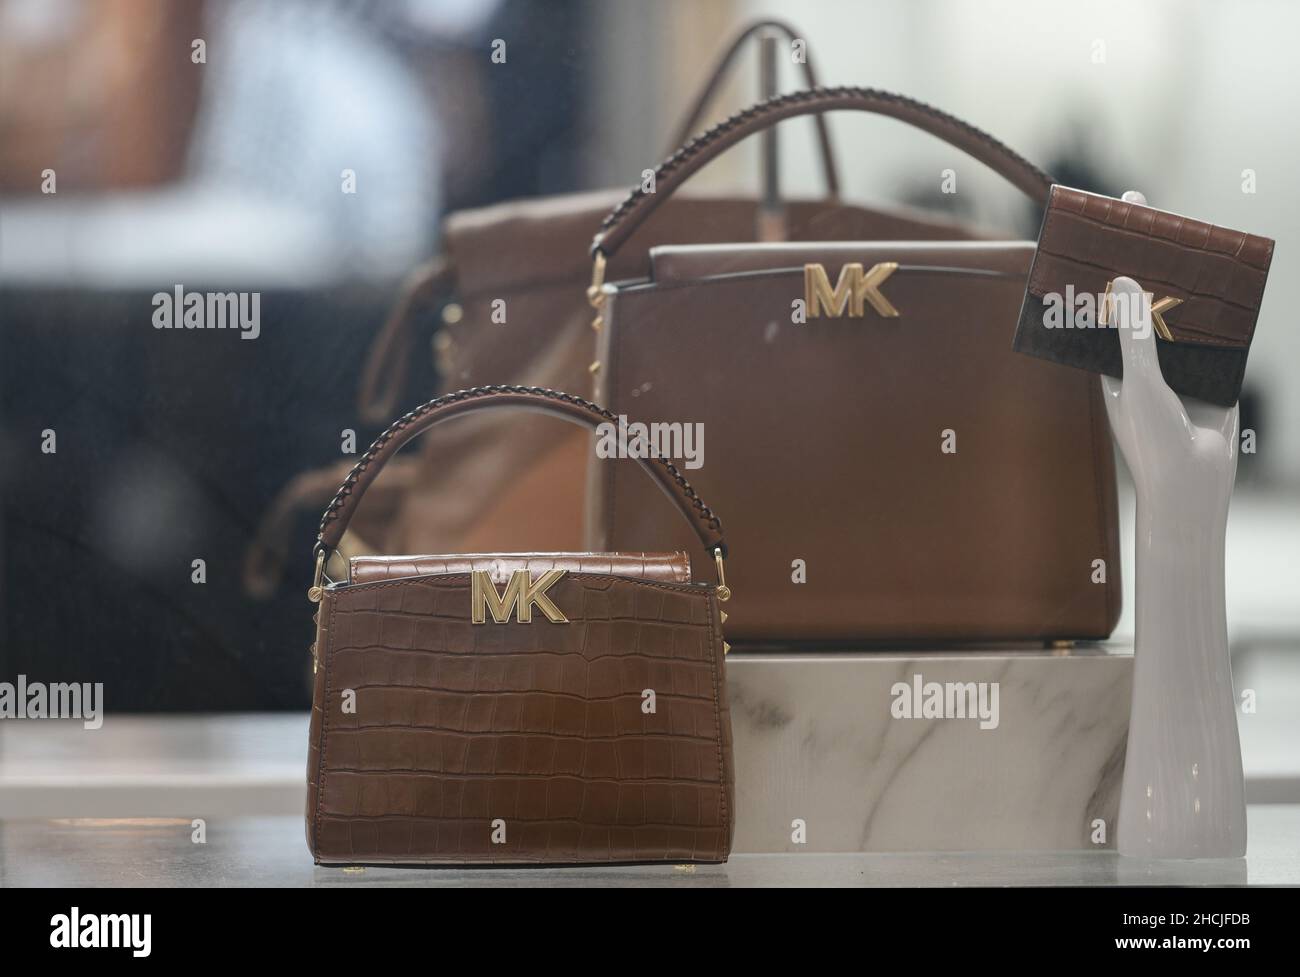 Michael kors handbags -Fotos und -Bildmaterial in hoher Auflösung – Alamy